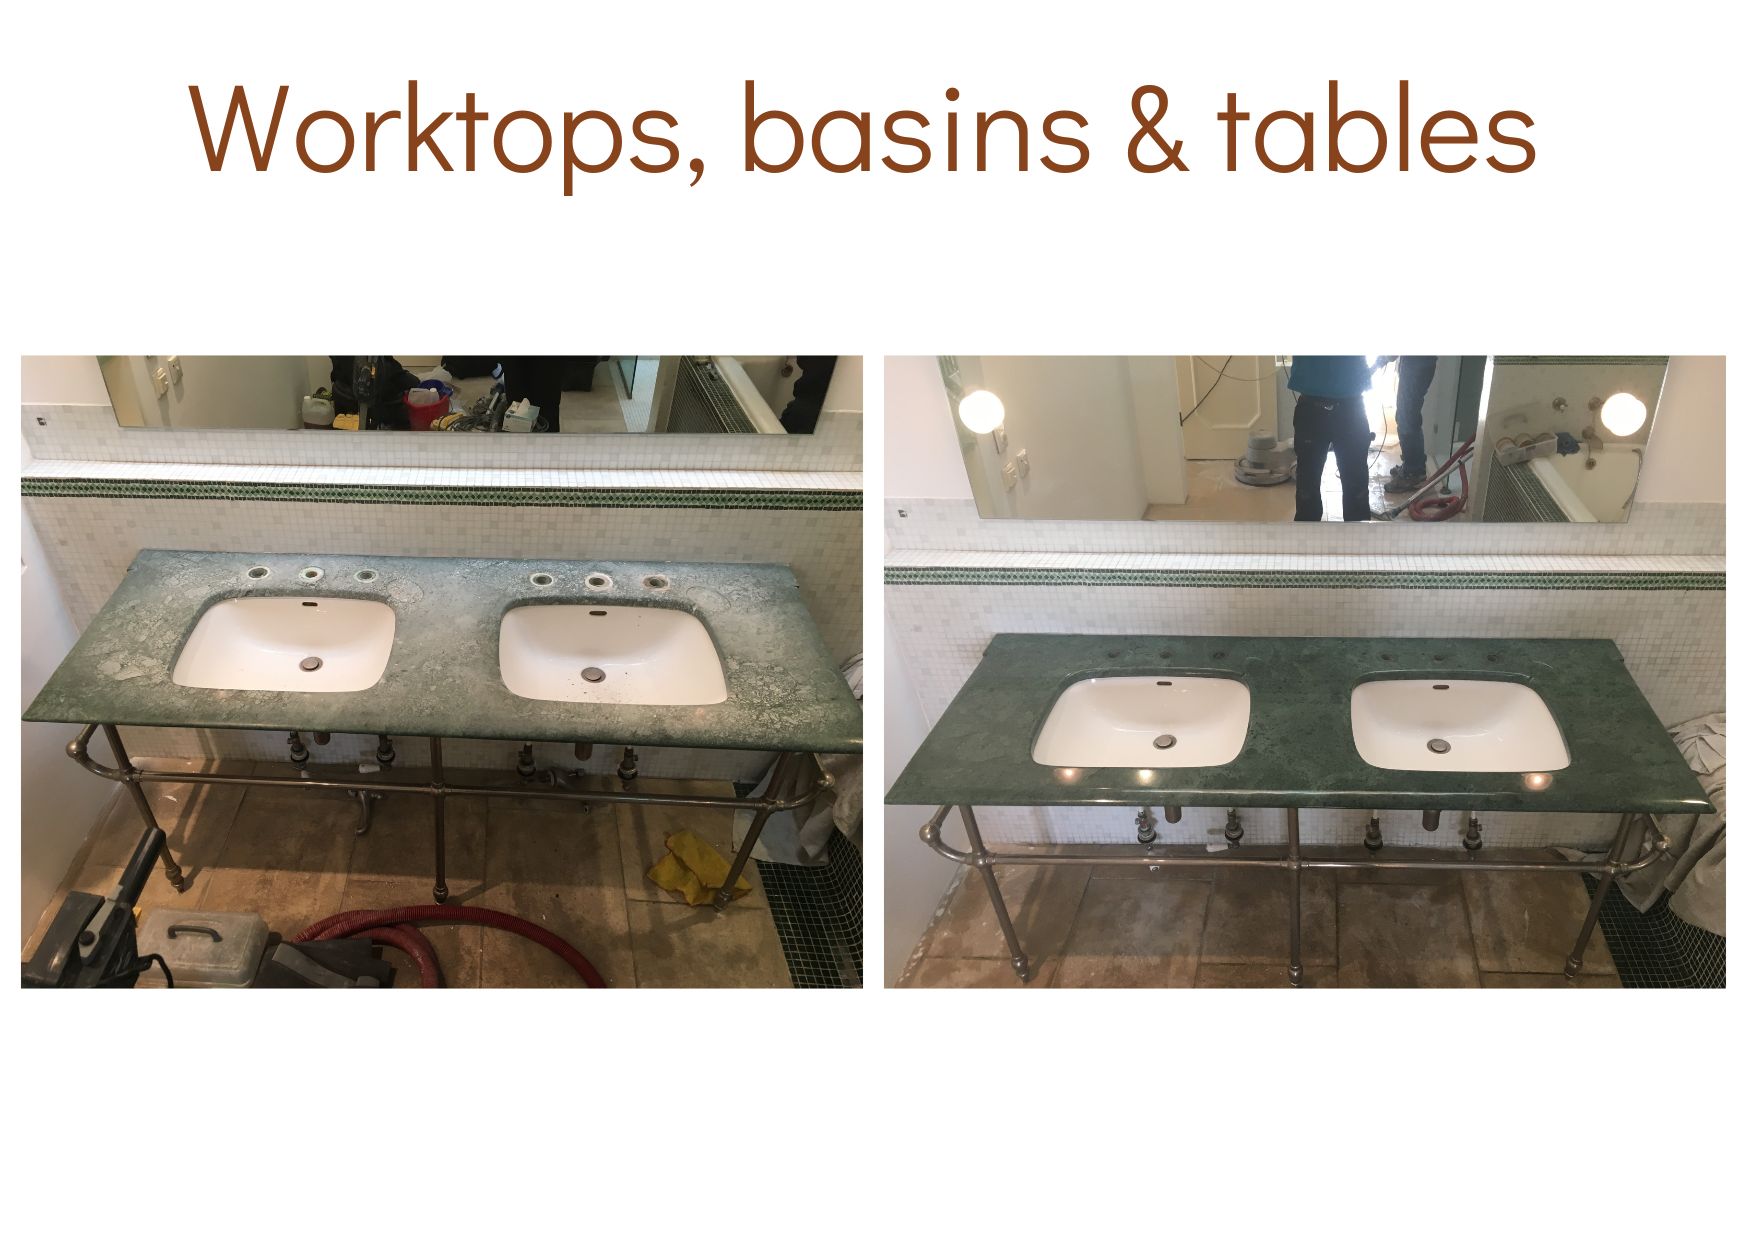 Worktops, basins & tables